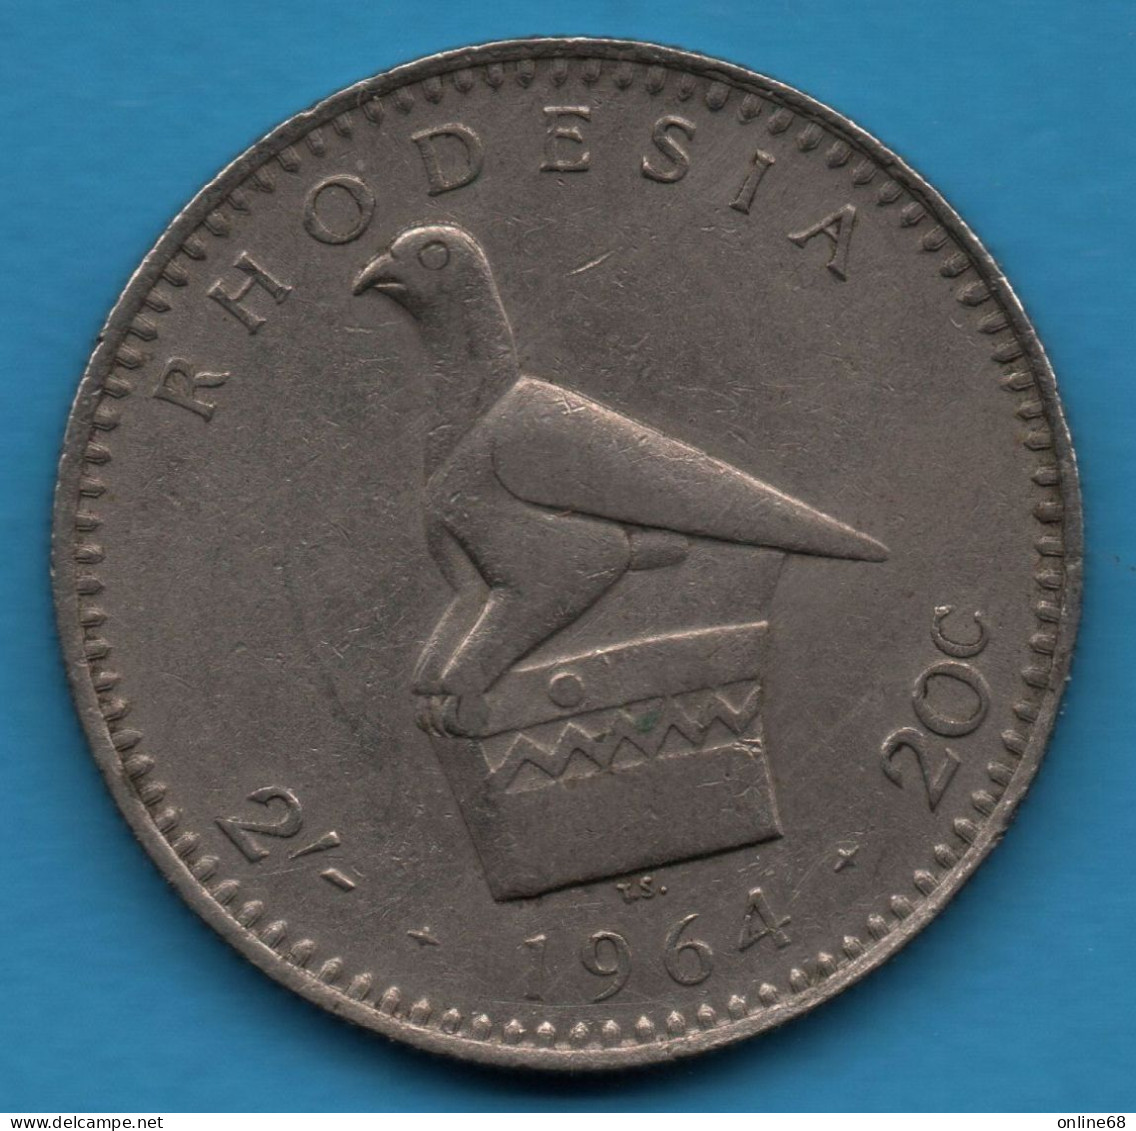 RHODESIA 2 Shillings / 20 Cents 1964 KM# 3 QEII - Rhodesia